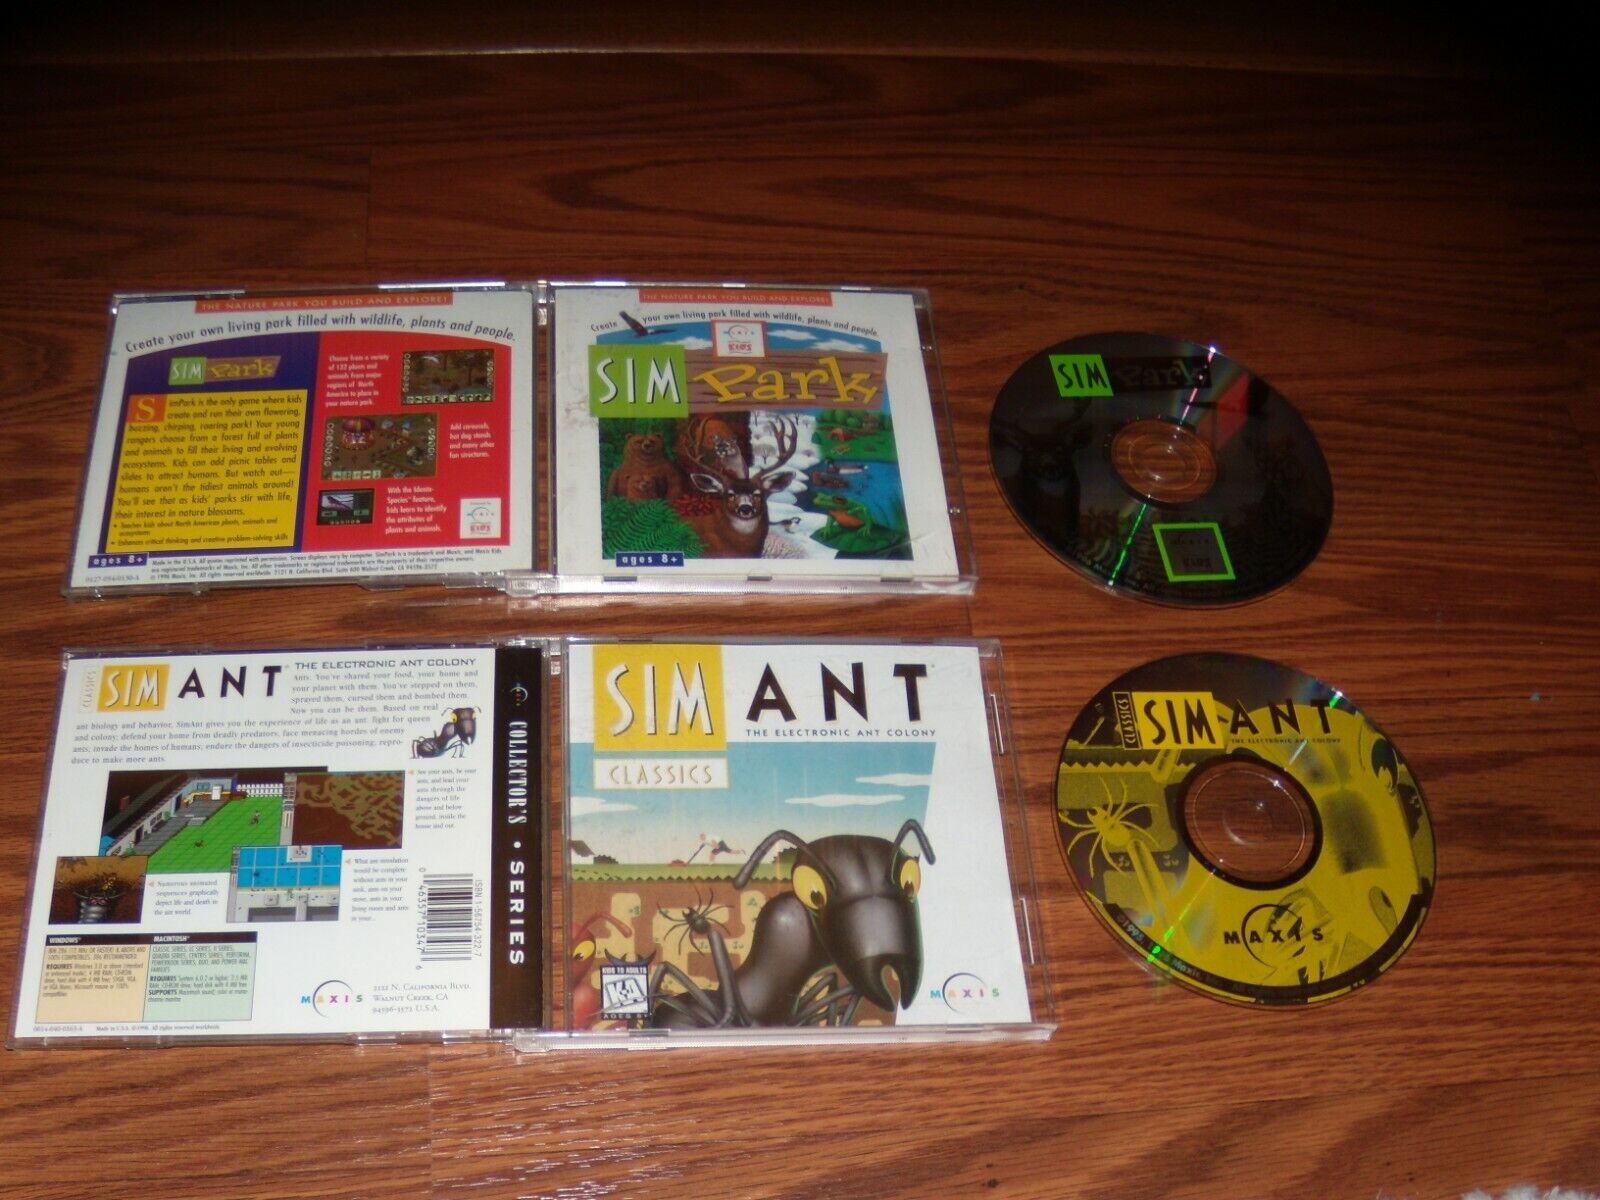 2 PC Games: Sim Ant and Sim Park CD-ROM games